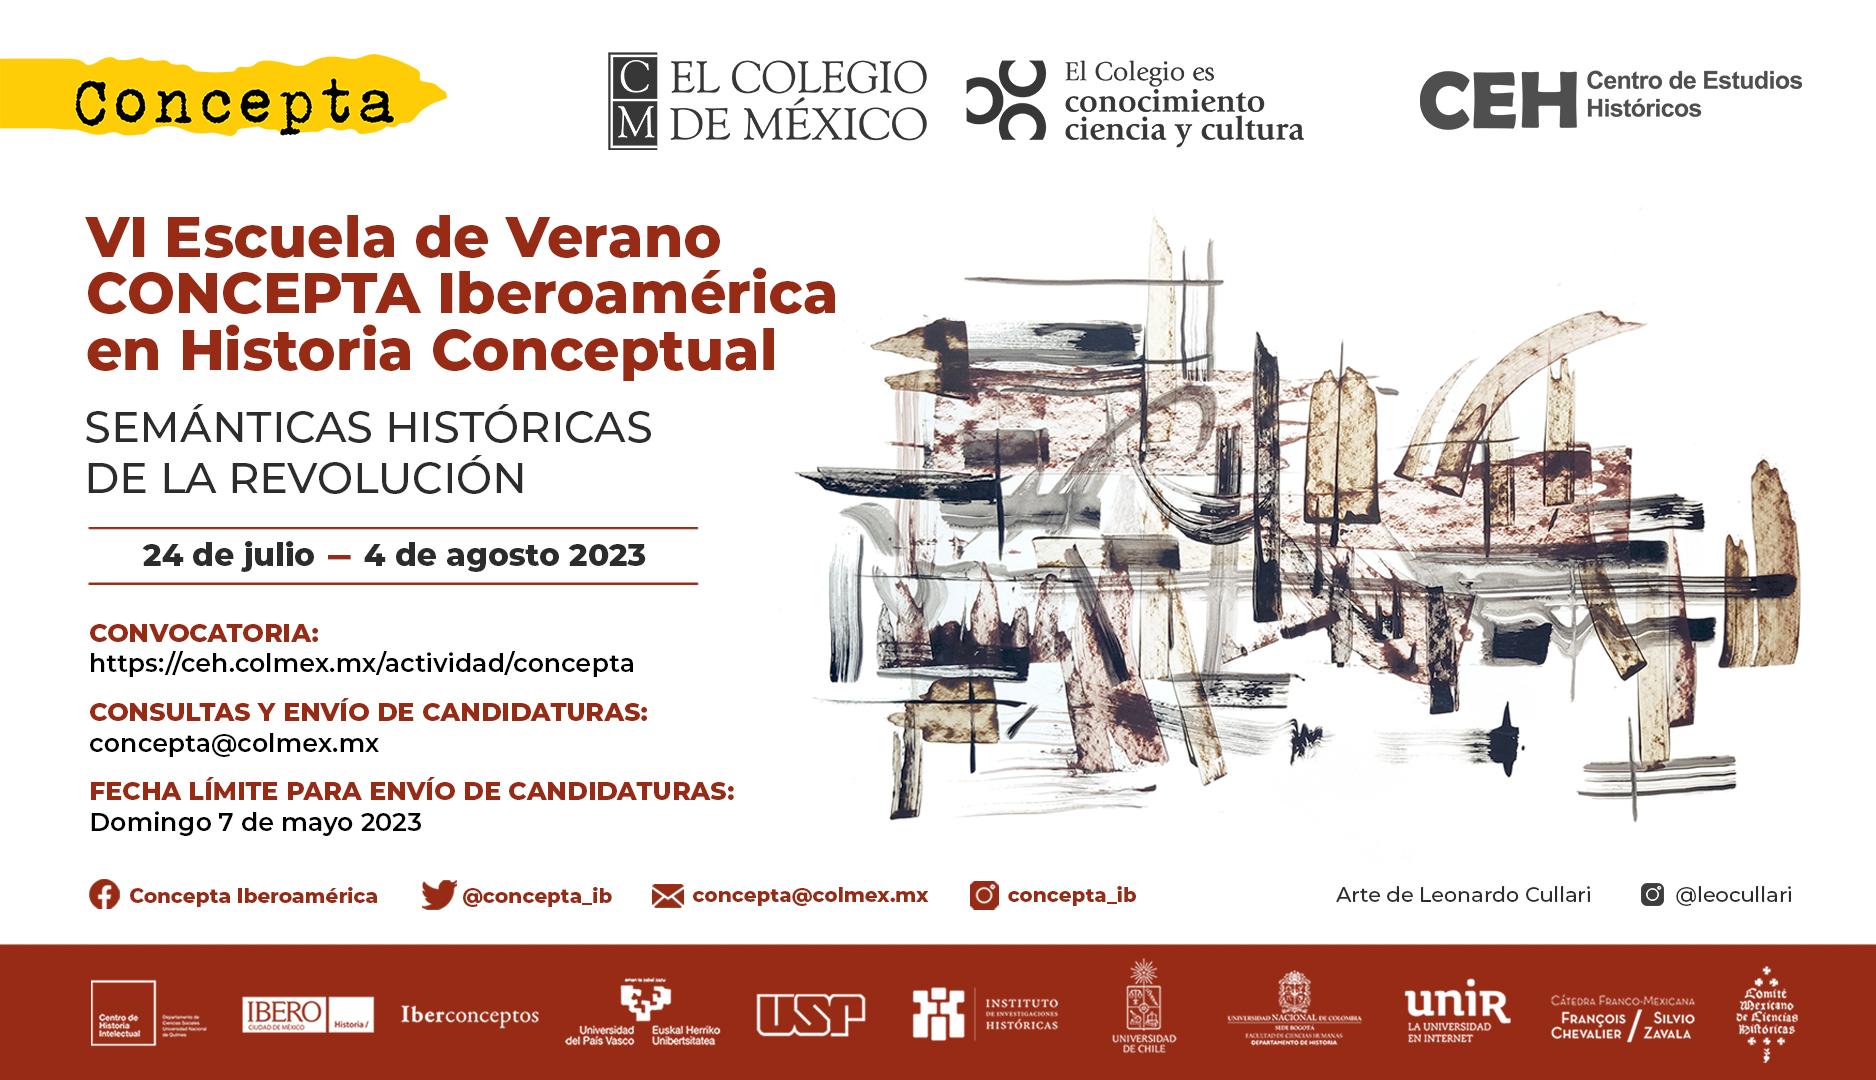 VI Escuela de Verano CONCEPTA Iberoamérica en Historia Conceptual 